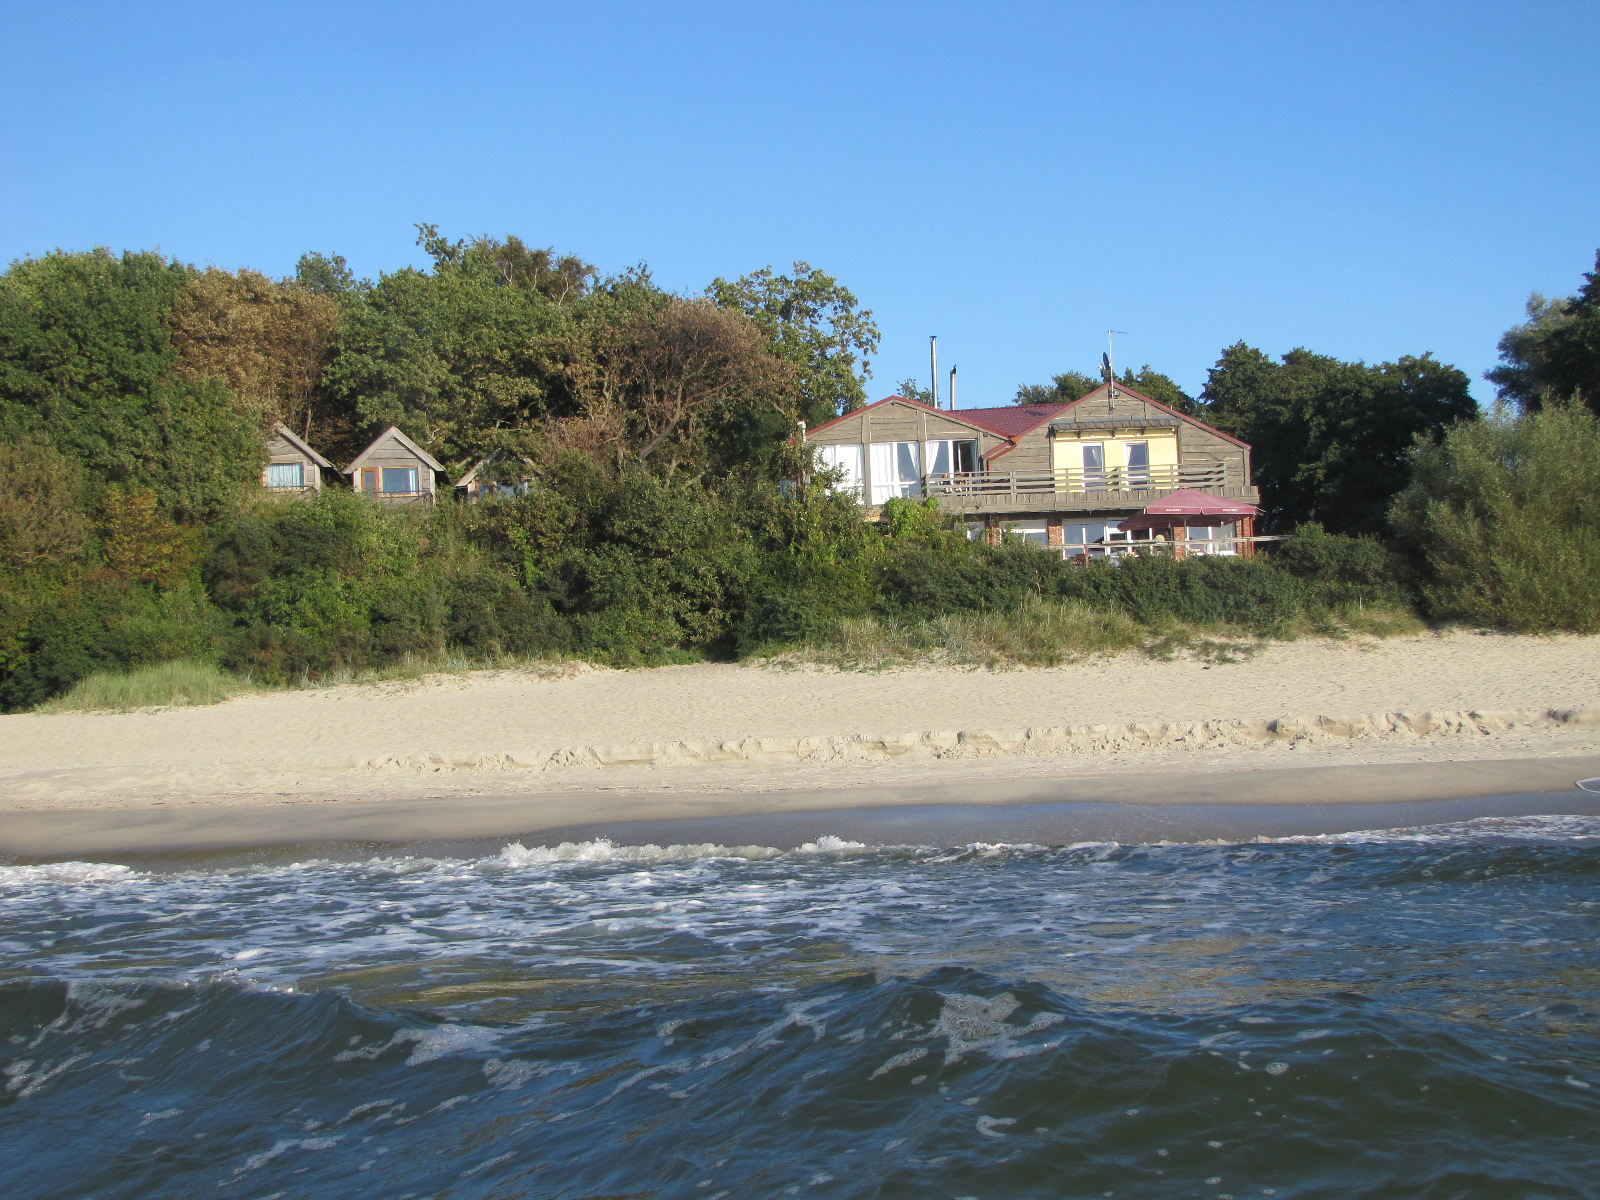 Fotografija Vitland beach nahaja se v naravnem okolju